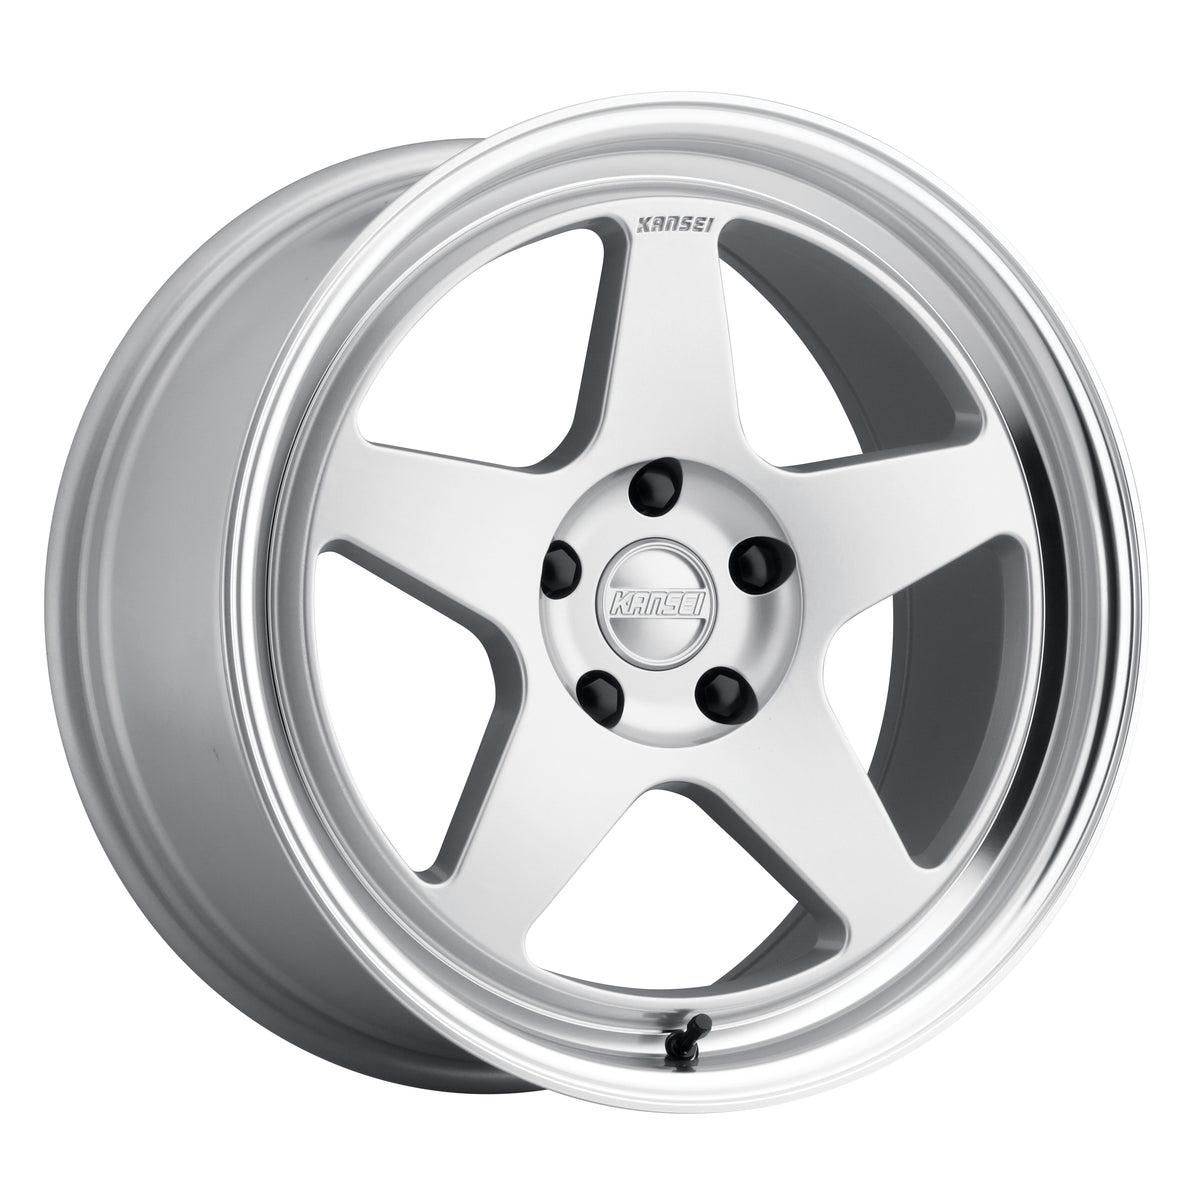 K12H KNP Wheel, Size: 19" x 10.50", Bolt Pattern: 5 x 112 mm, Backspace: 6.62" [Finish: Hyper Silver]